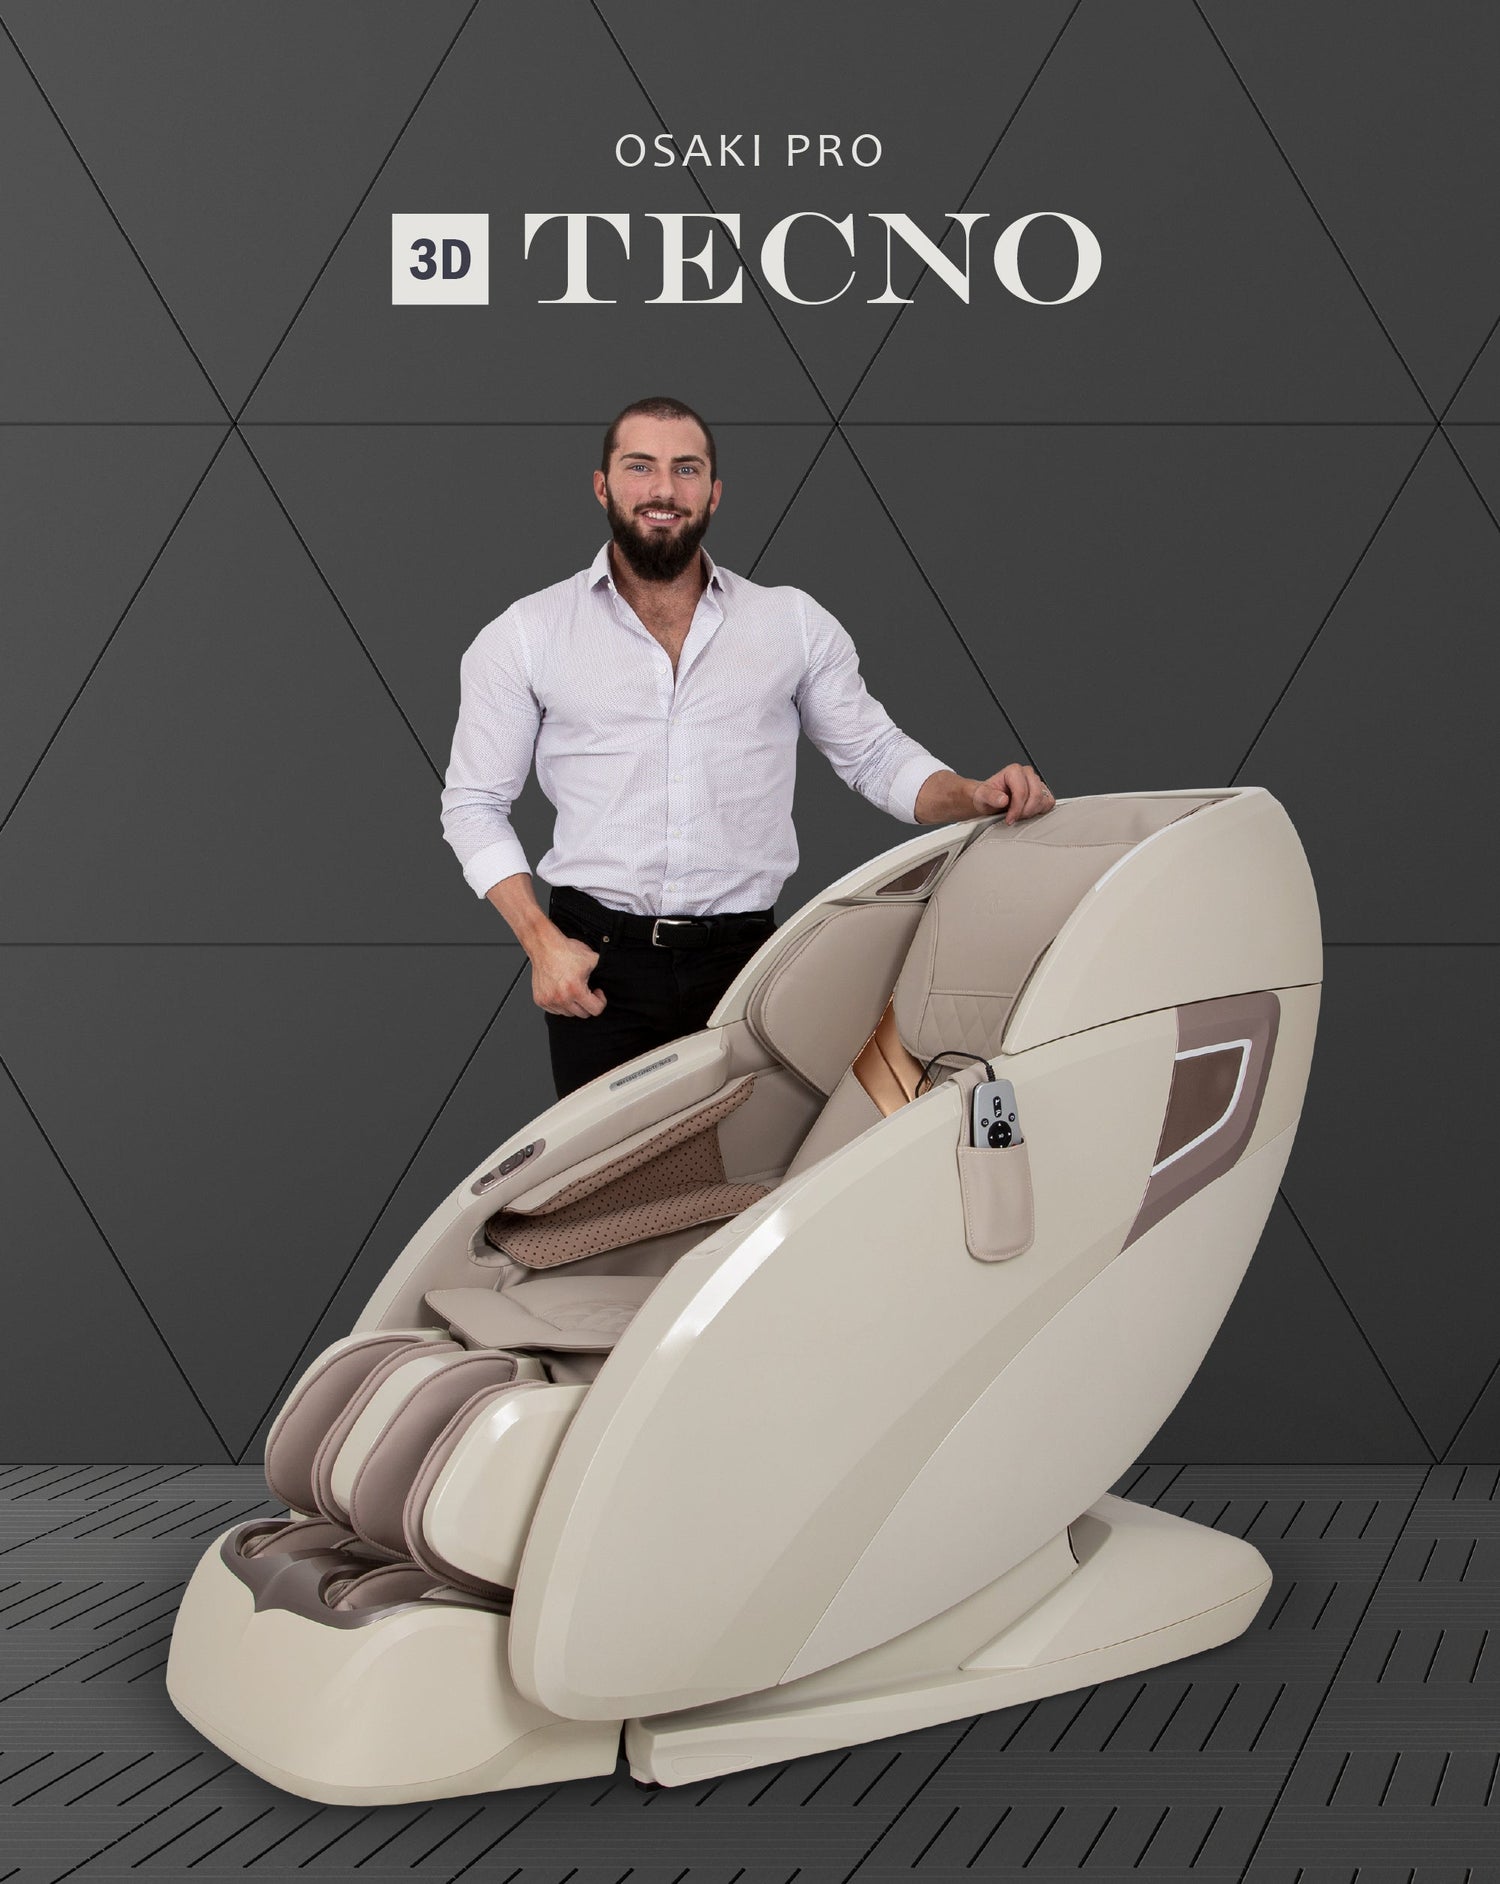 Osaki OS-Pro 3D Tecno Massage Chair